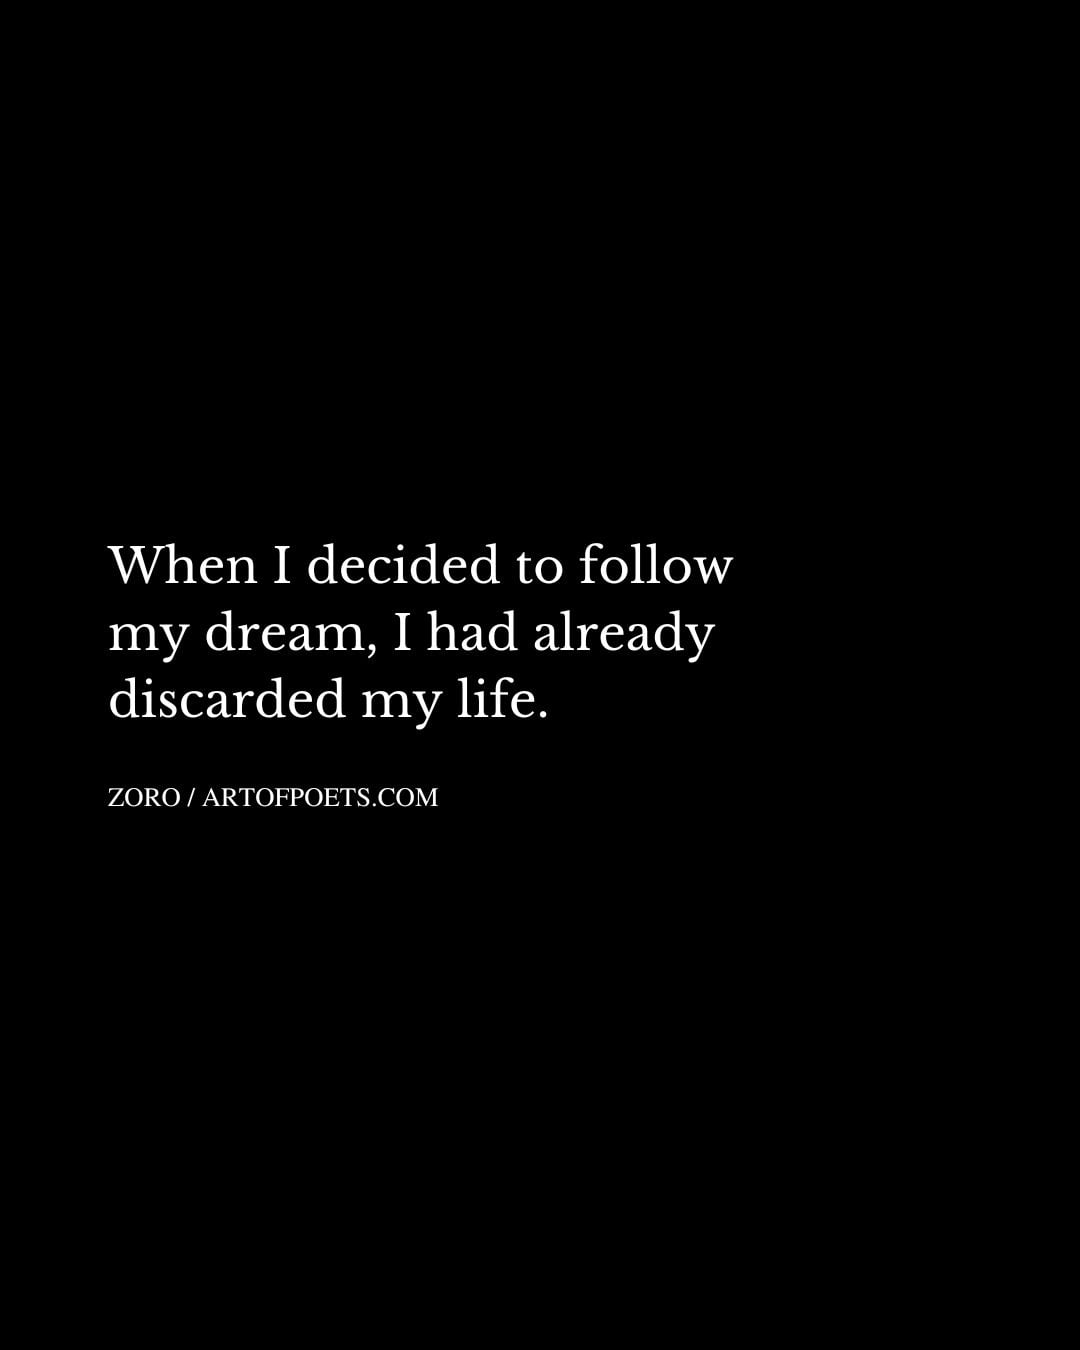 When I decided to follow my dream I had already discarded my life